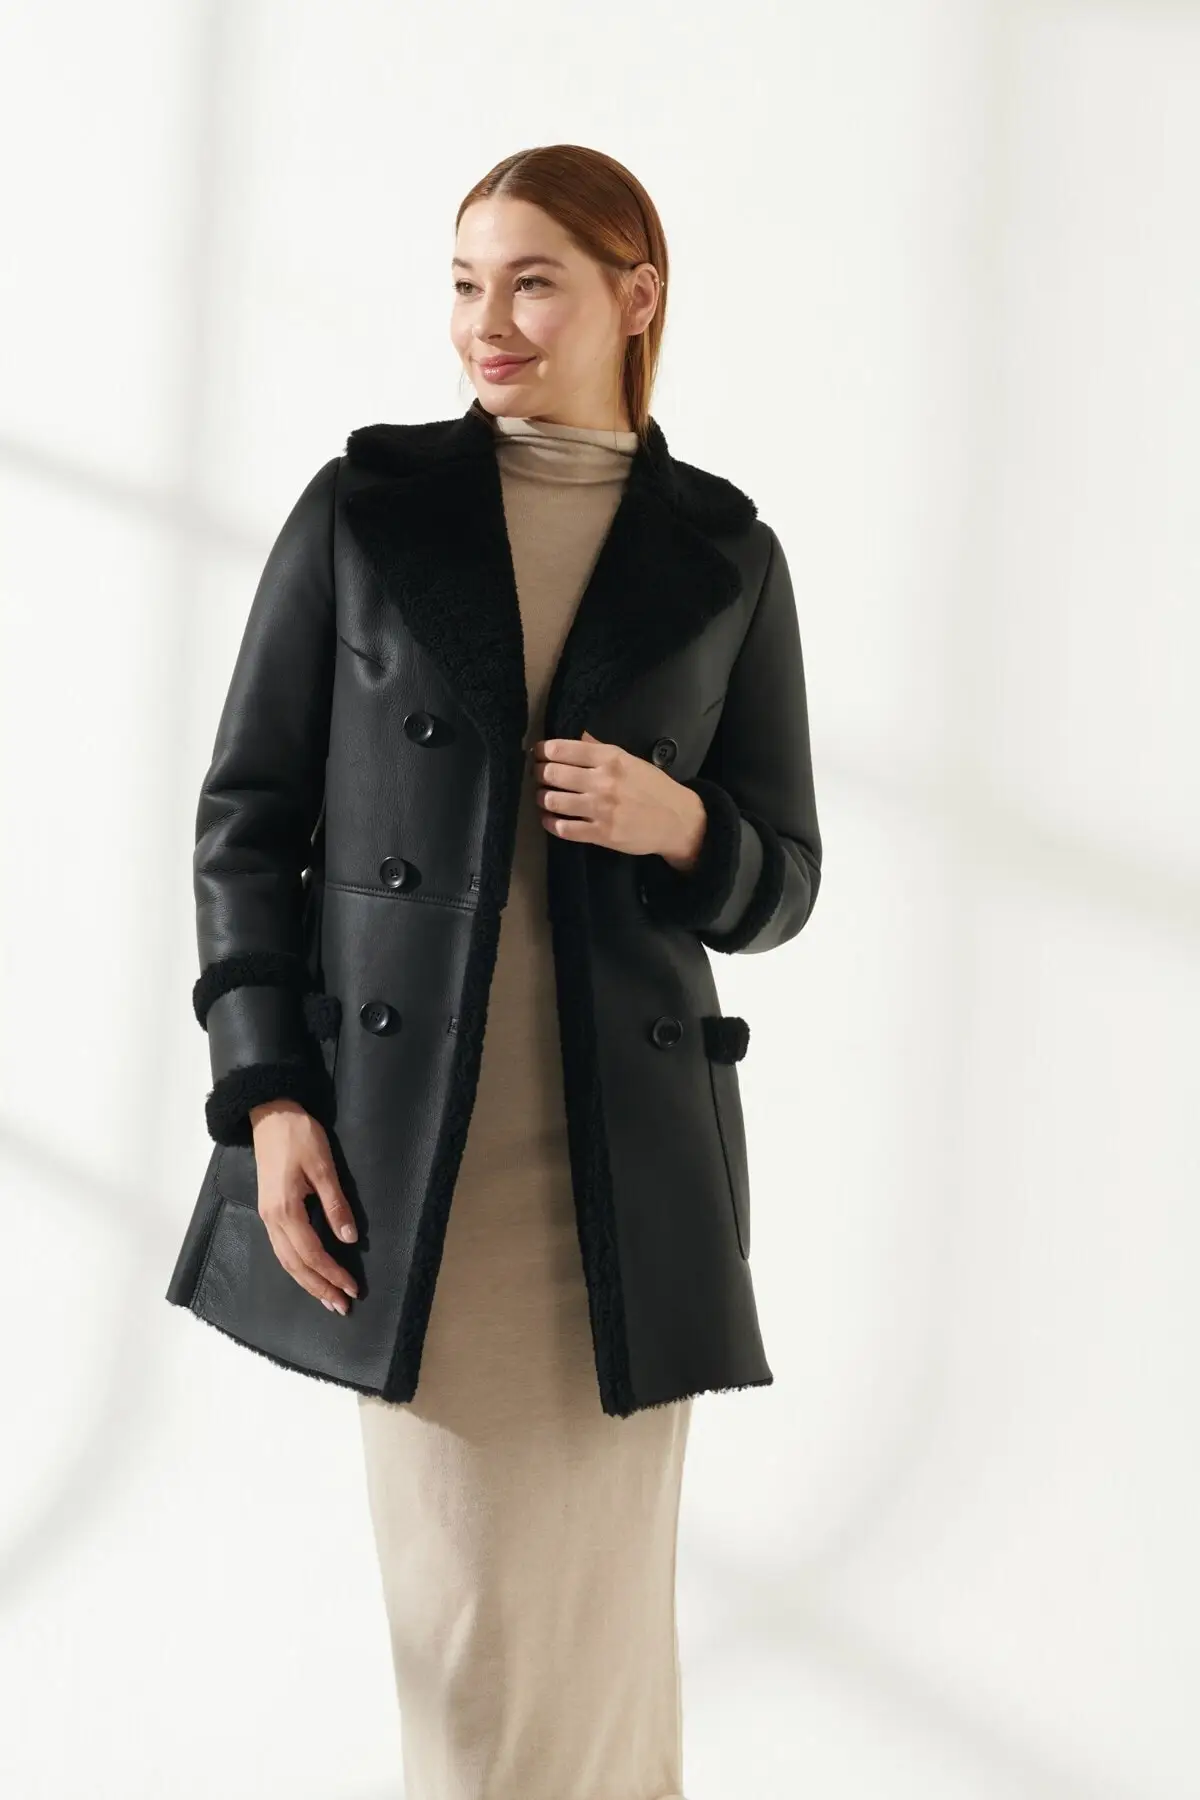 Women's Fur coat Genuine Leather Jacket Winter Warm Coat New Season Design Clothing Products Classic Design Keeps you Warm Turkiyede Produced